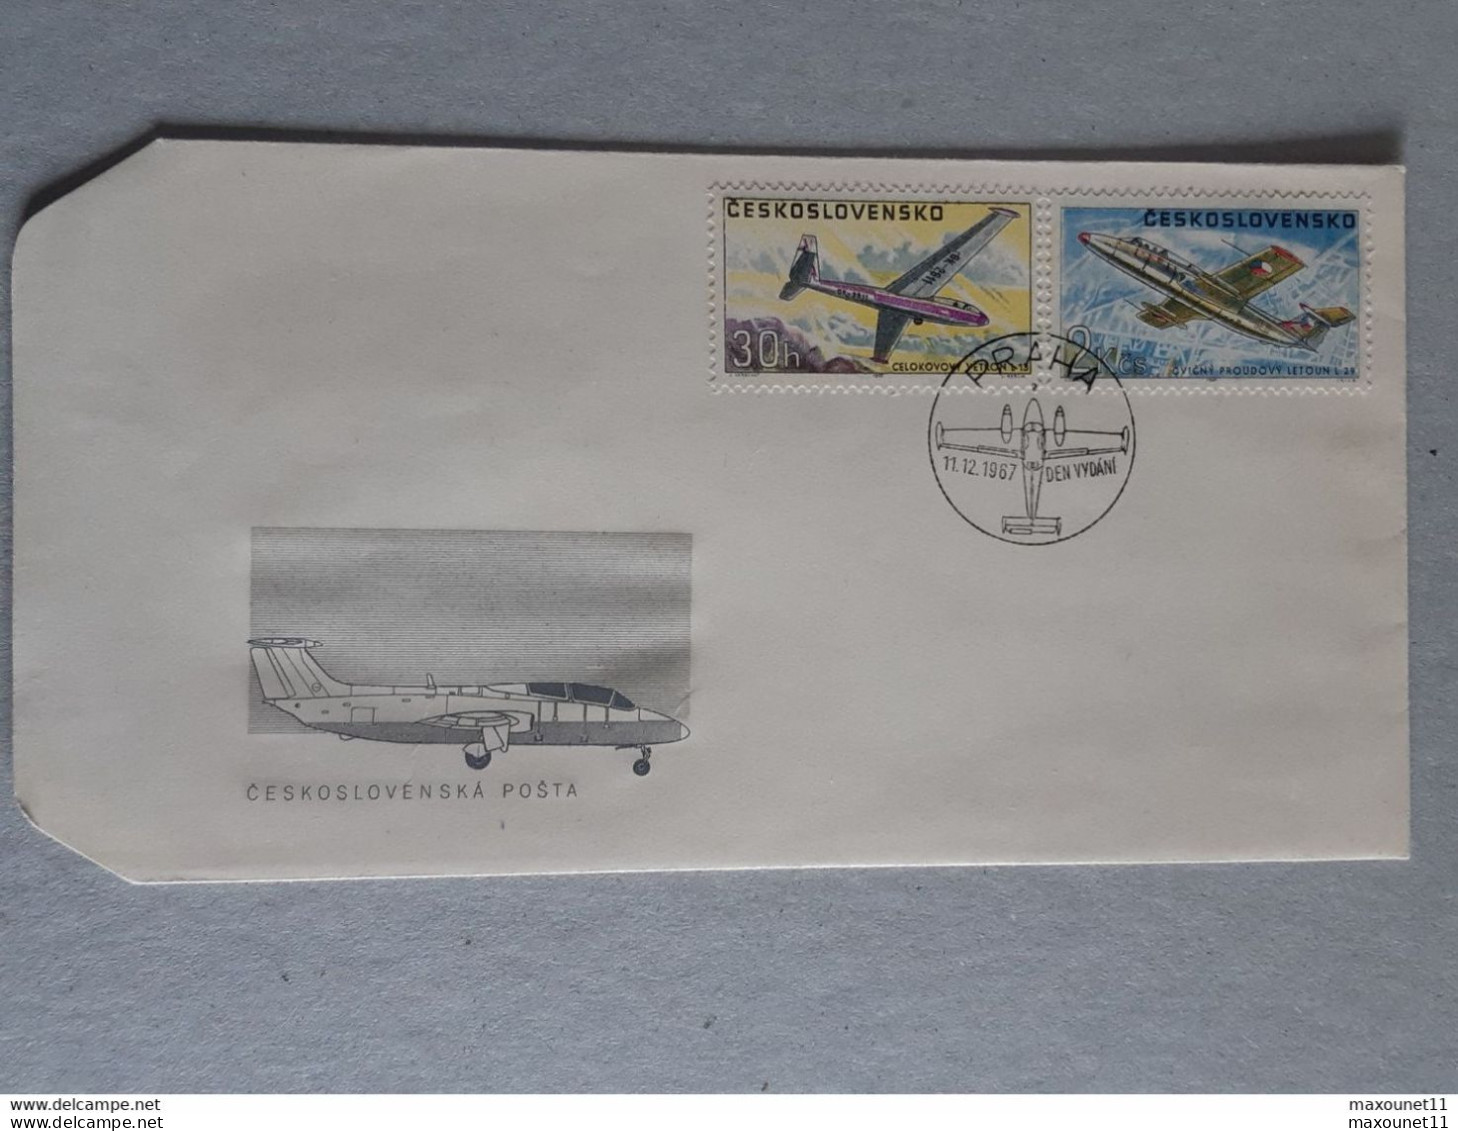 Enveloppe Ceskoslovensko Posta - Tchecoslovaquie - Praha - Prague - Avion - Aviation ... Lot430 . - Airmail